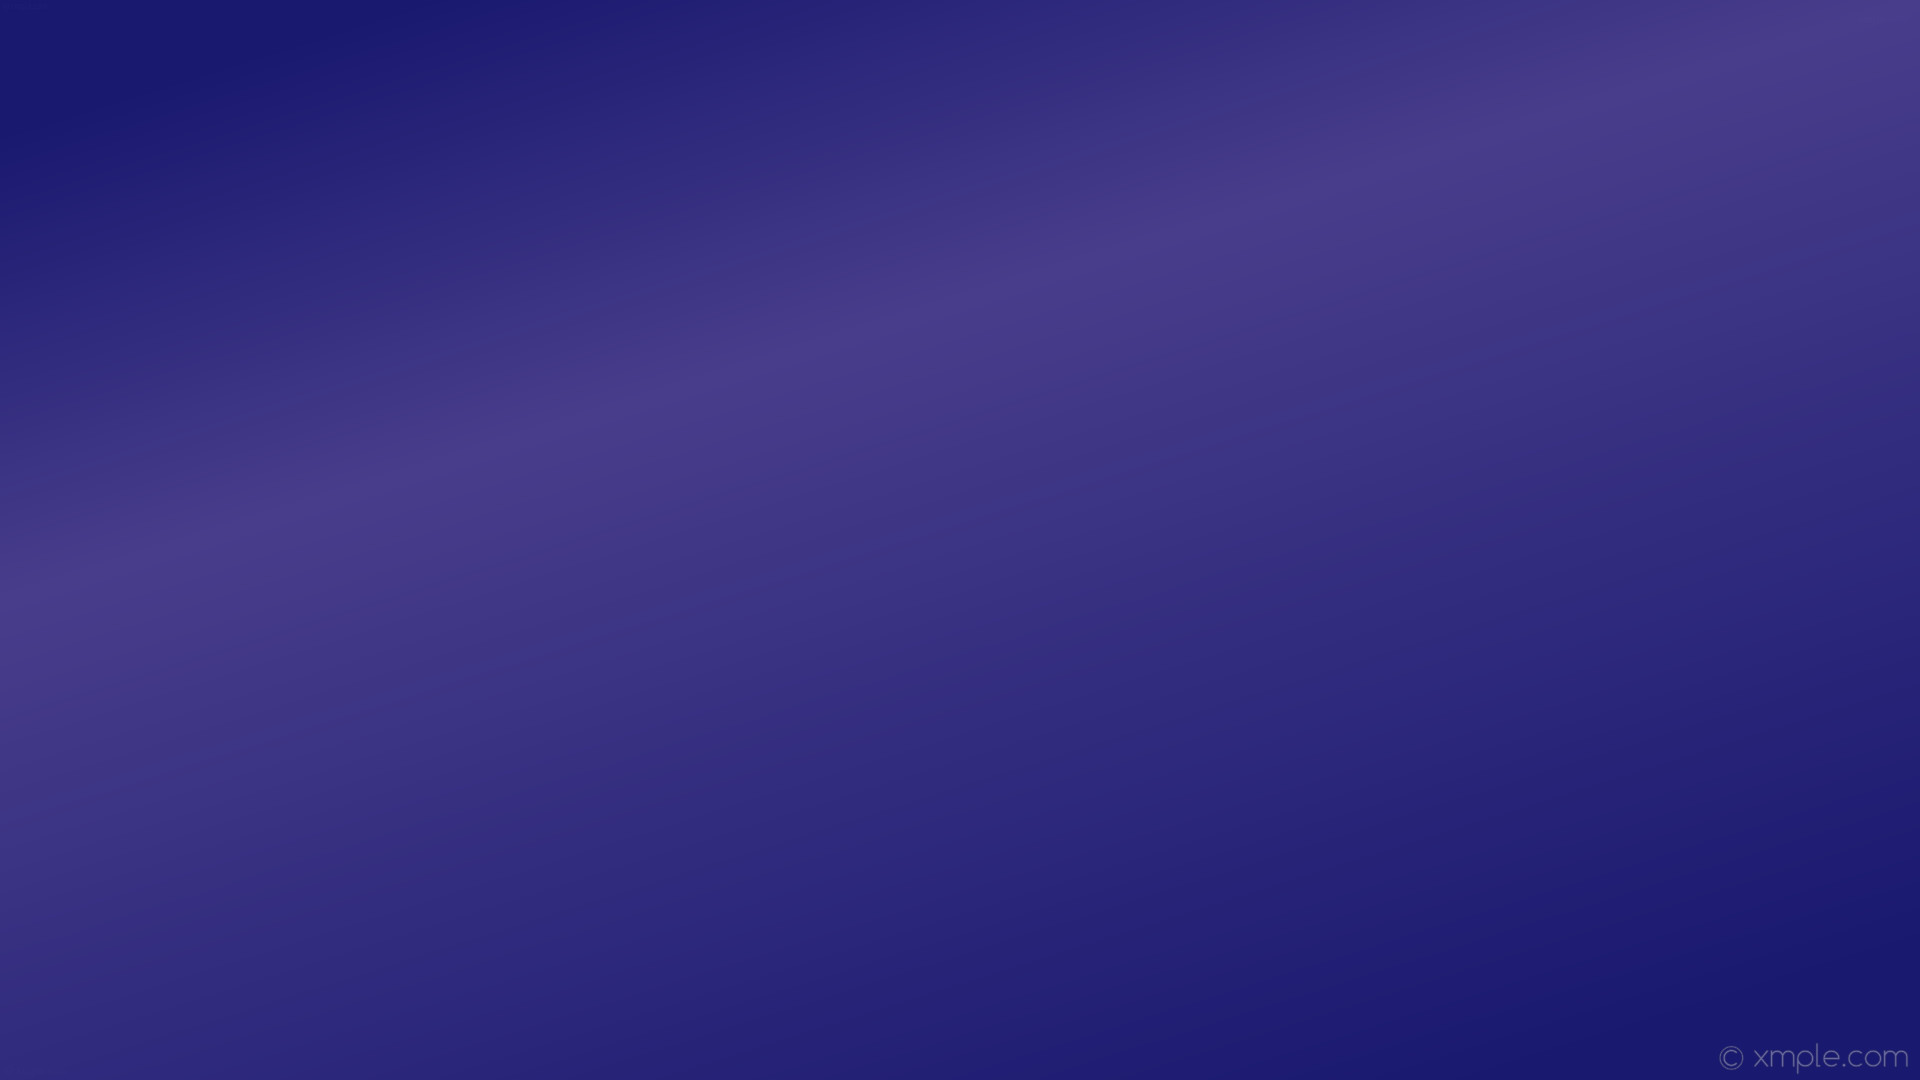 1920x1080 wallpaper highlight blue gradient purple linear midnight blue dark slate  blue #191970 #483d8b 135